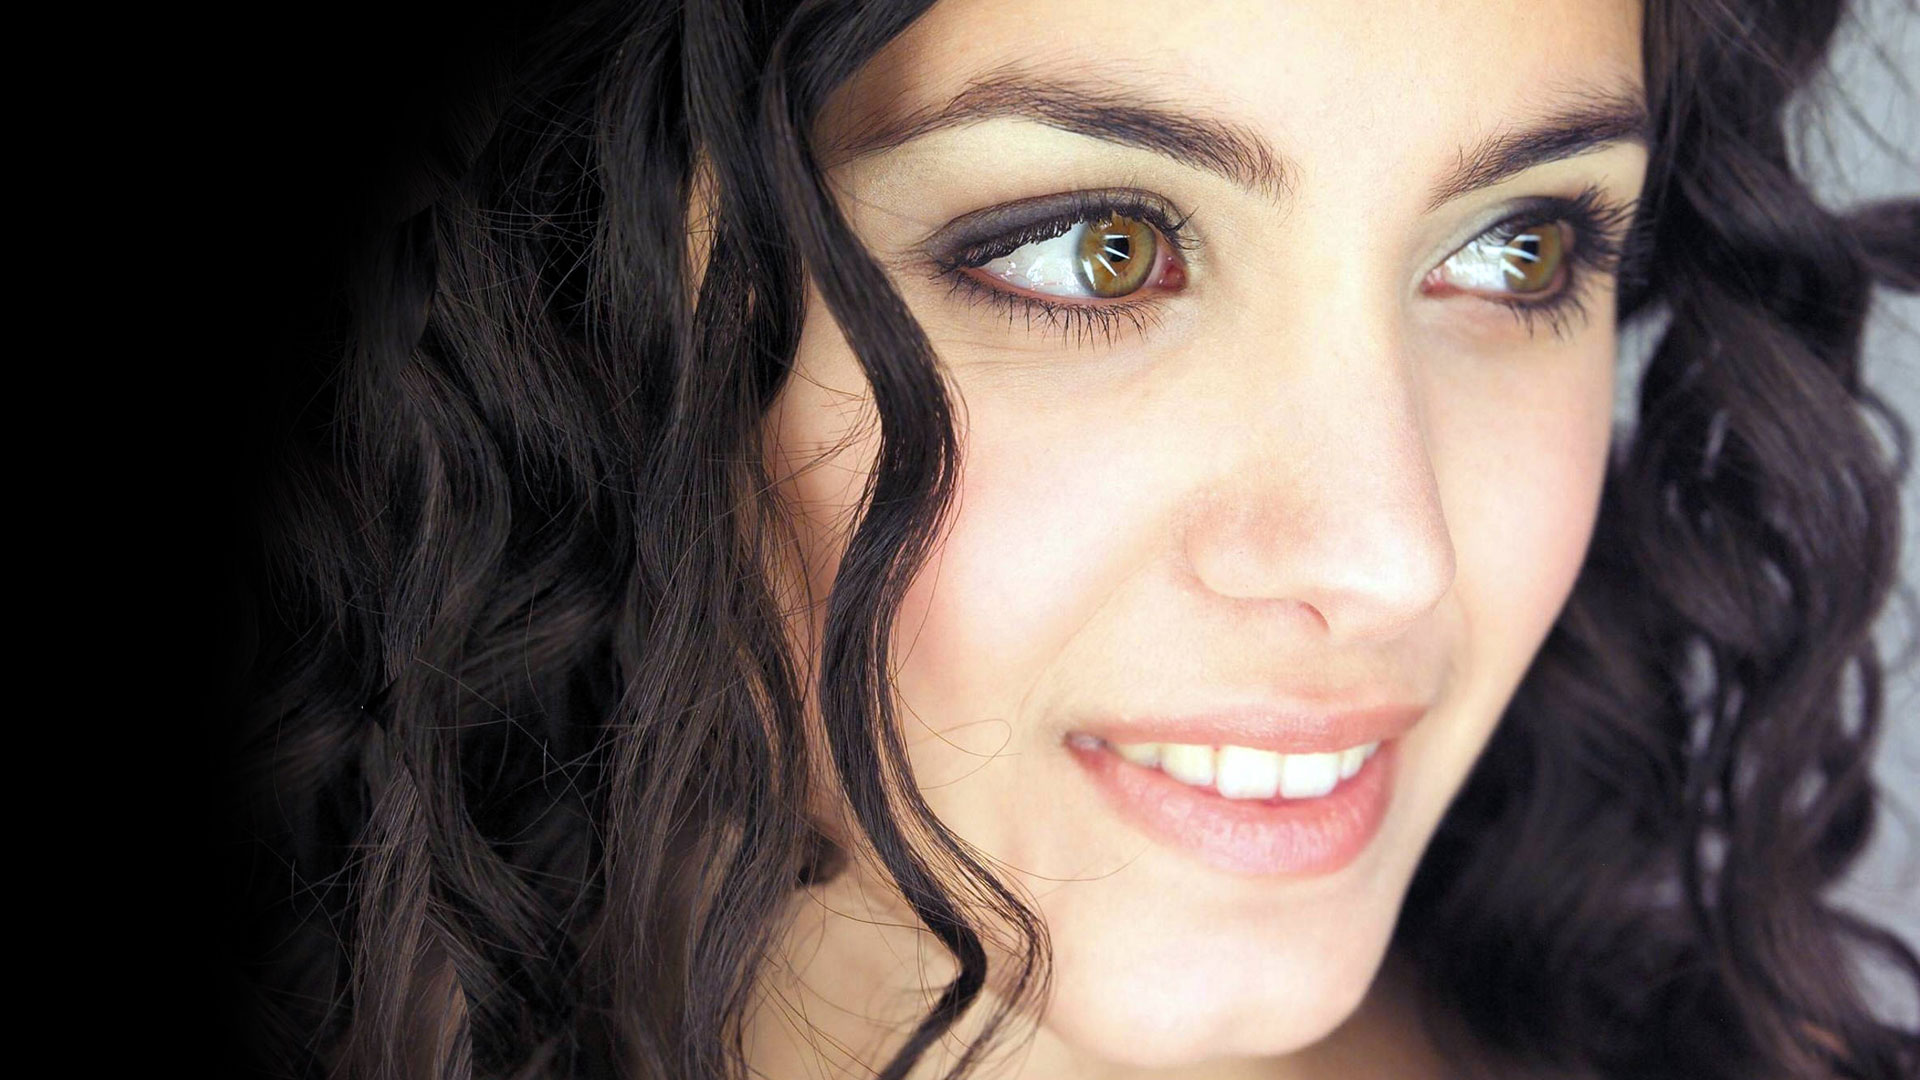 The Closest Thing To Crazy av Katie Melua